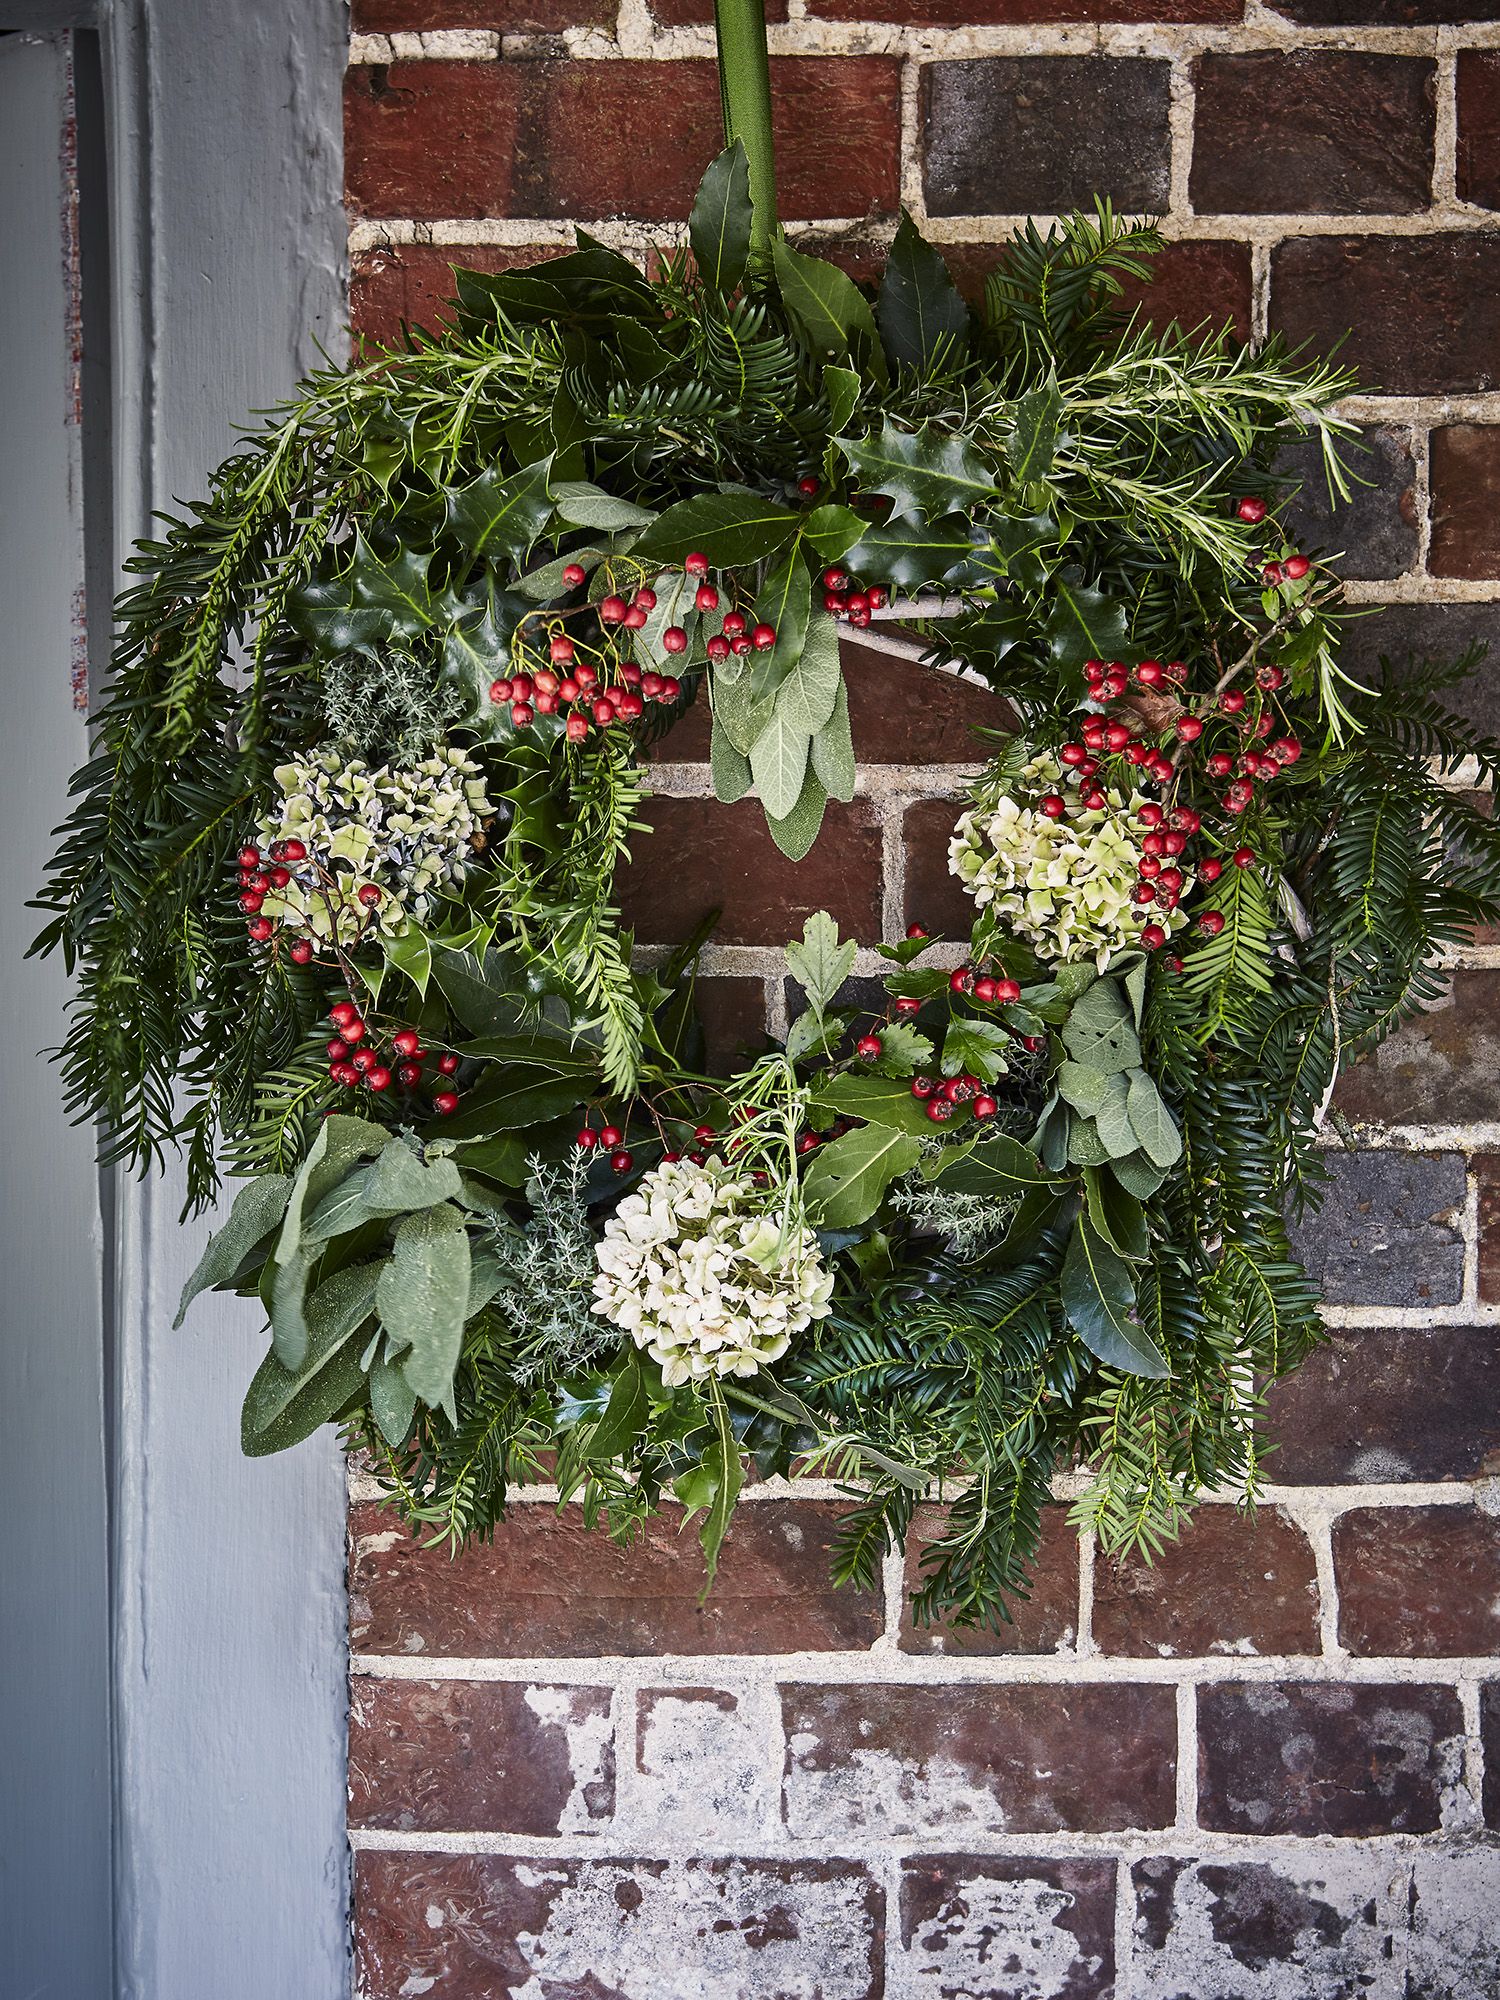 Wreath Supplies You Need To Make Make A Perfect Wreath